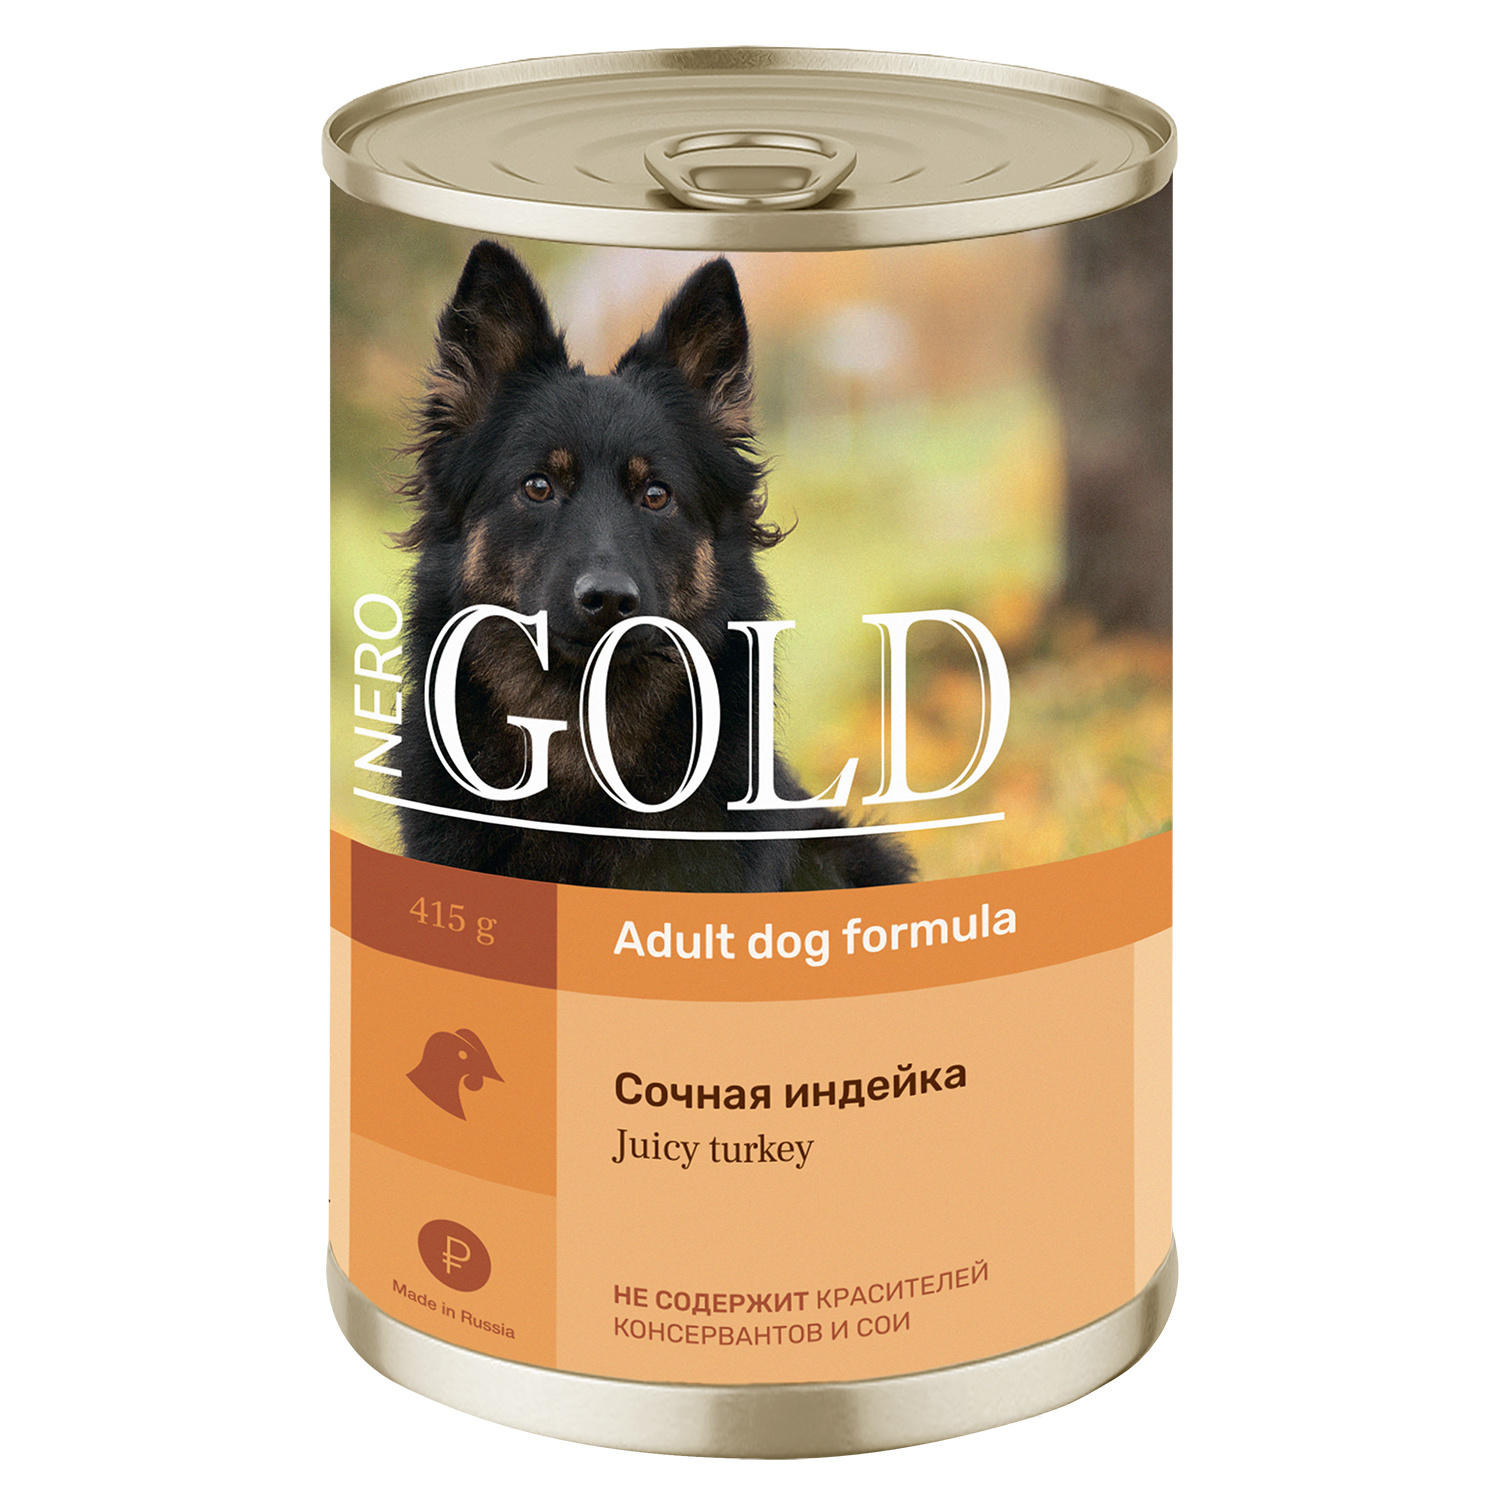 Nero Gold консервы Nero Gold консервы консервы для собак Сочная индейка (415 г)